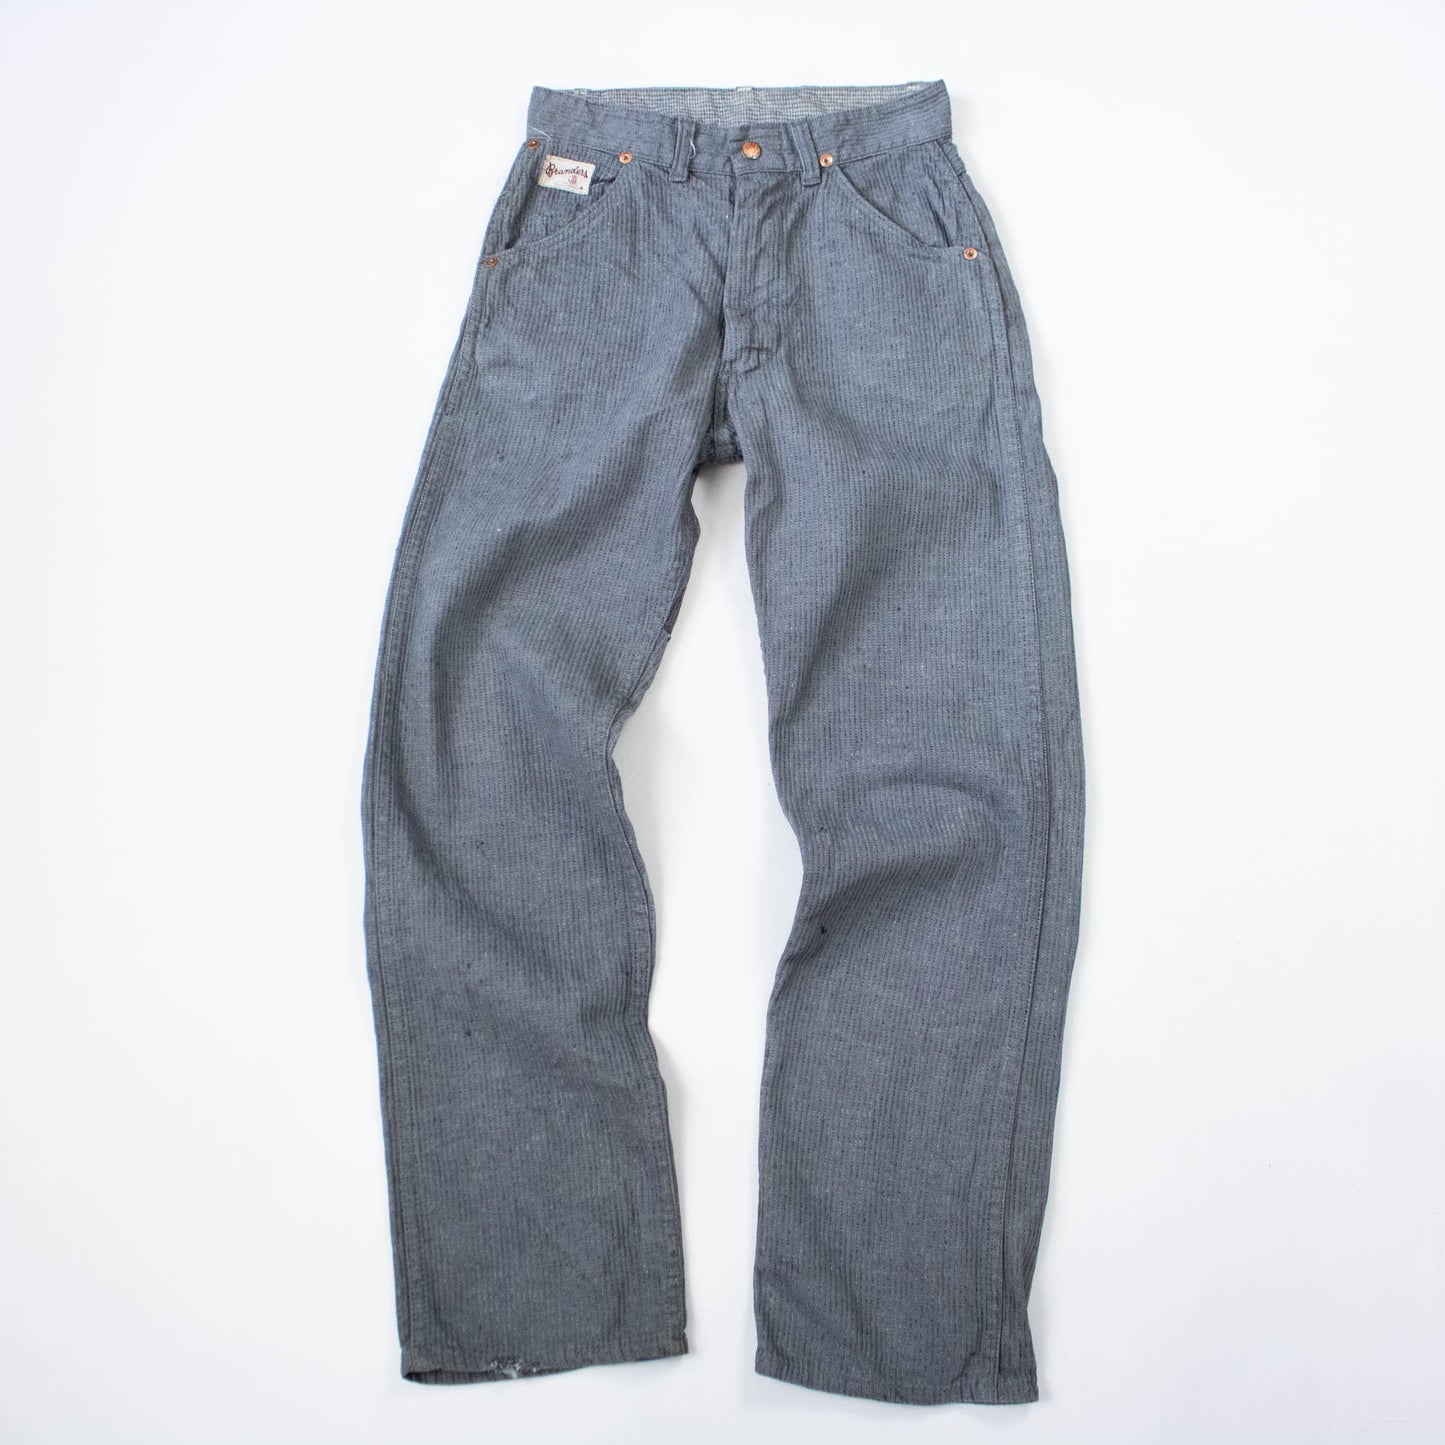 60s Cotton Textured Jeans